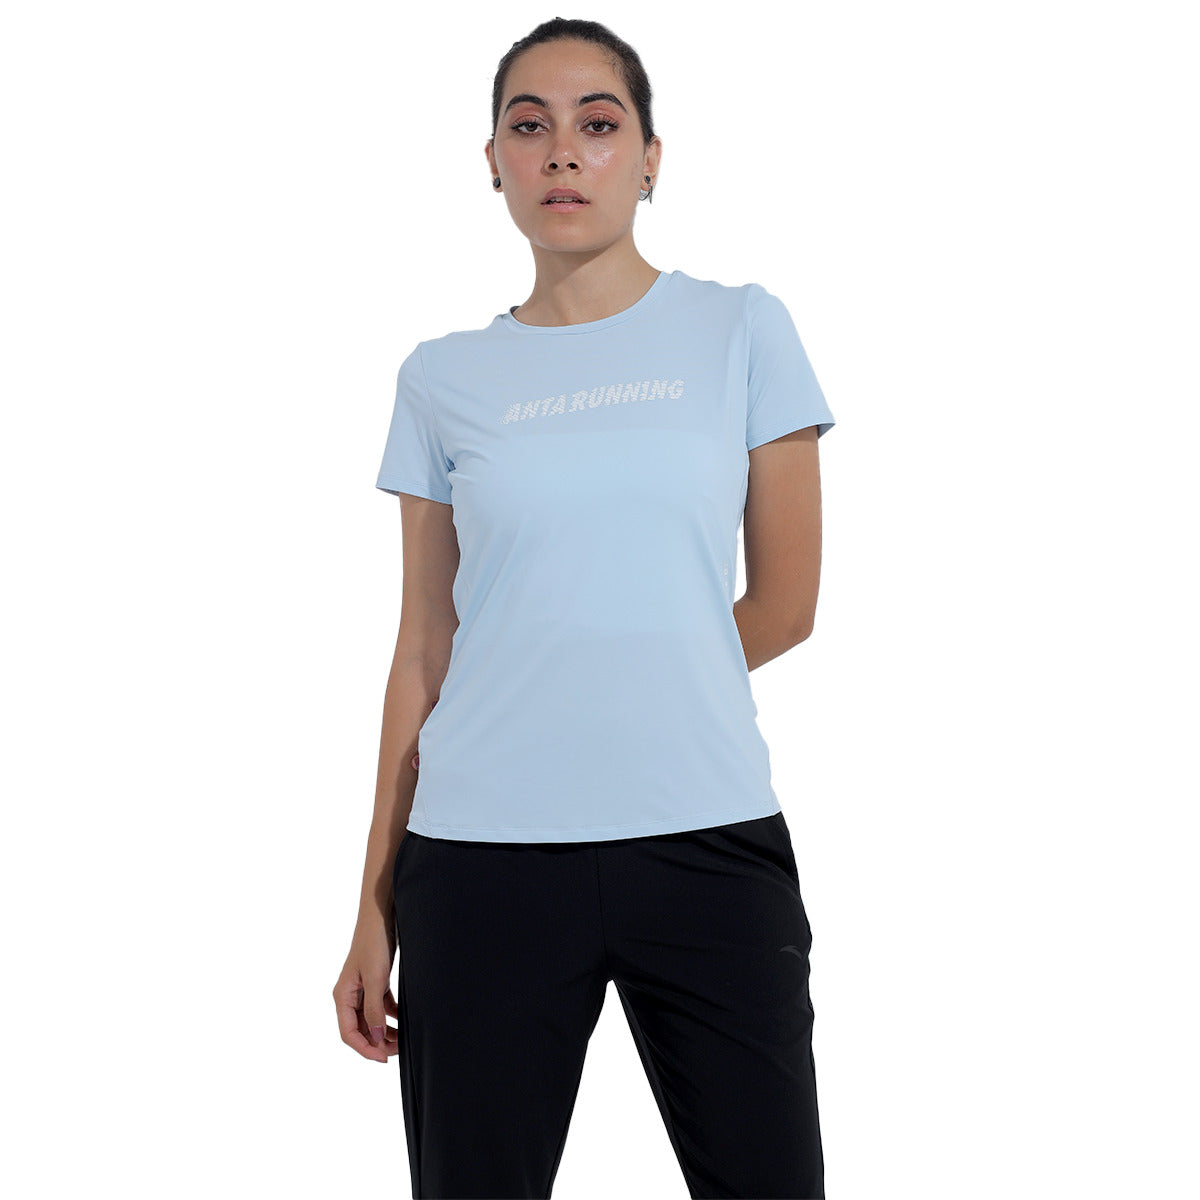 Anta Sports T-Shirt For Women, Sky Blue